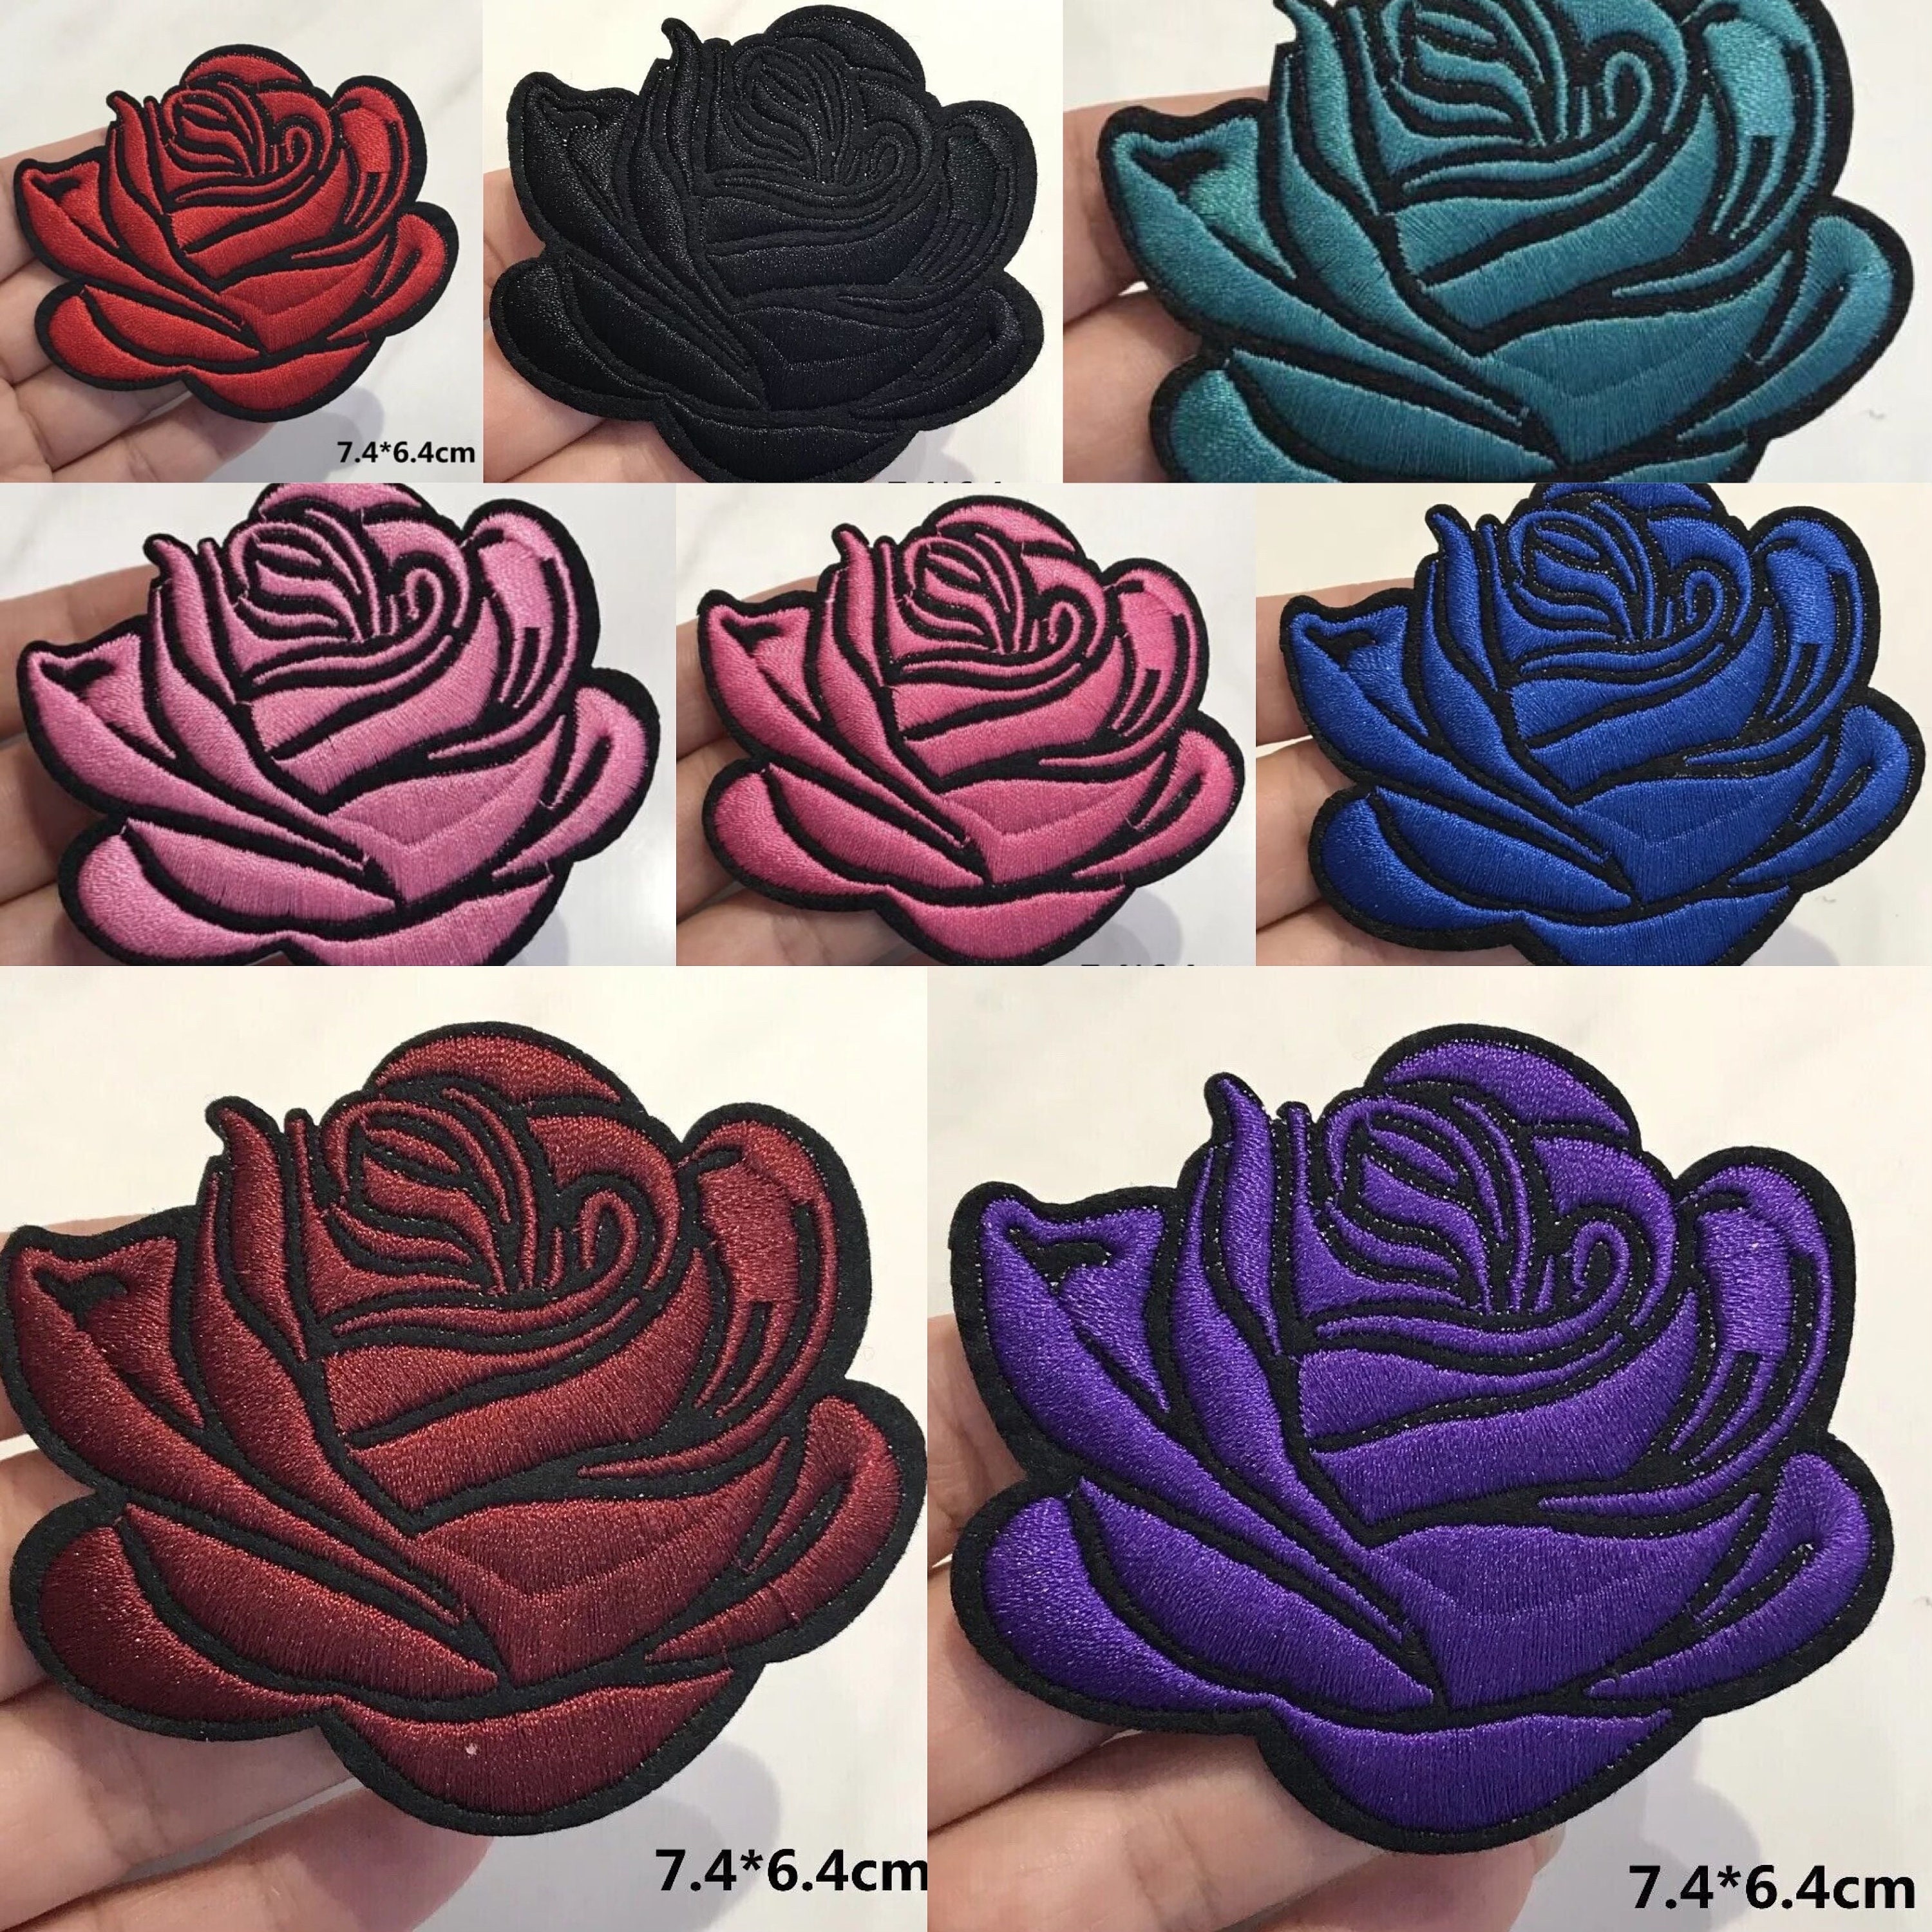 Silk Rose Heads, 12pcs, Black Artificial Flowers 